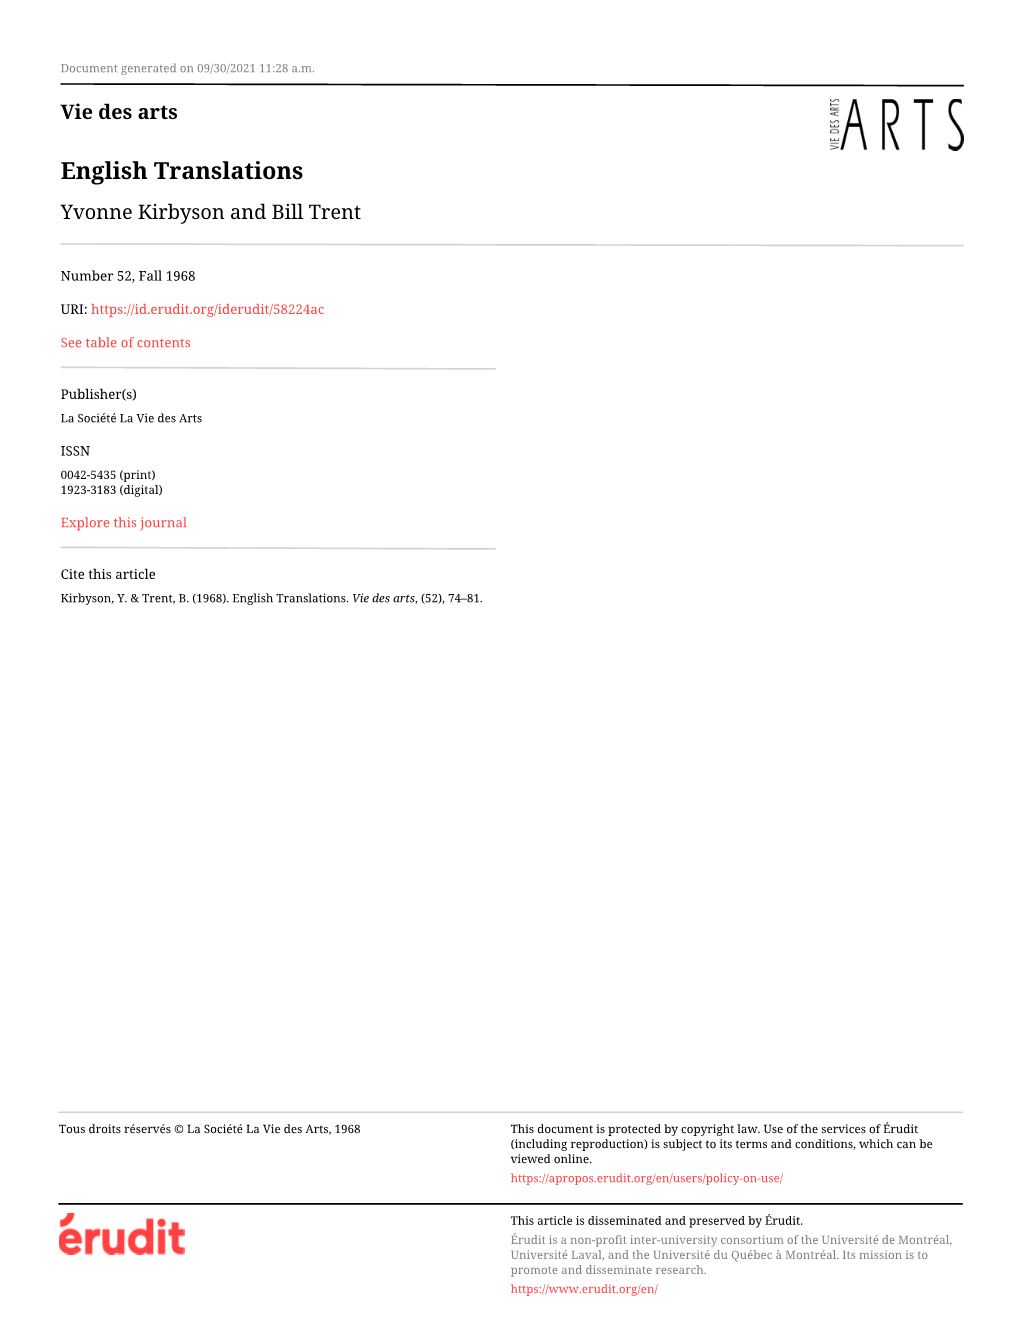 English Translations Yvonne Kirbyson and Bill Trent